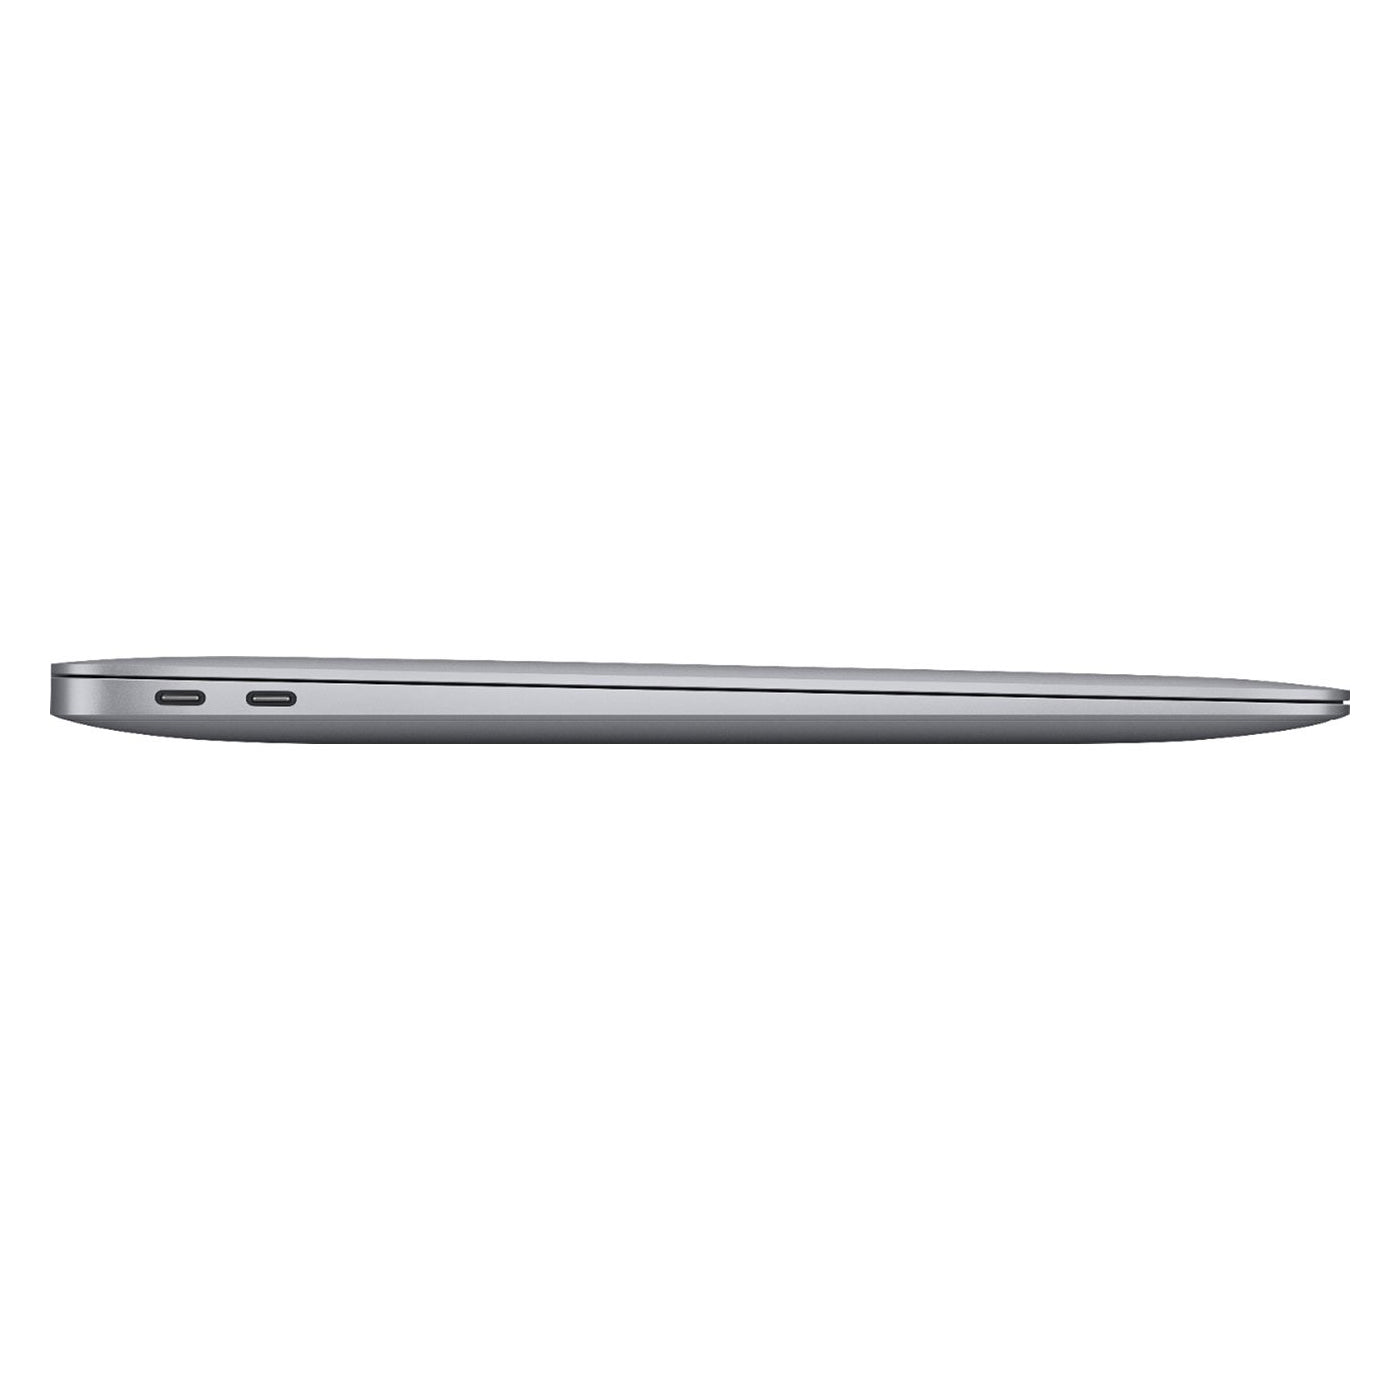 Apple Macbook Air MGN63LL/A M1 13.3" Laptop (Brand New)